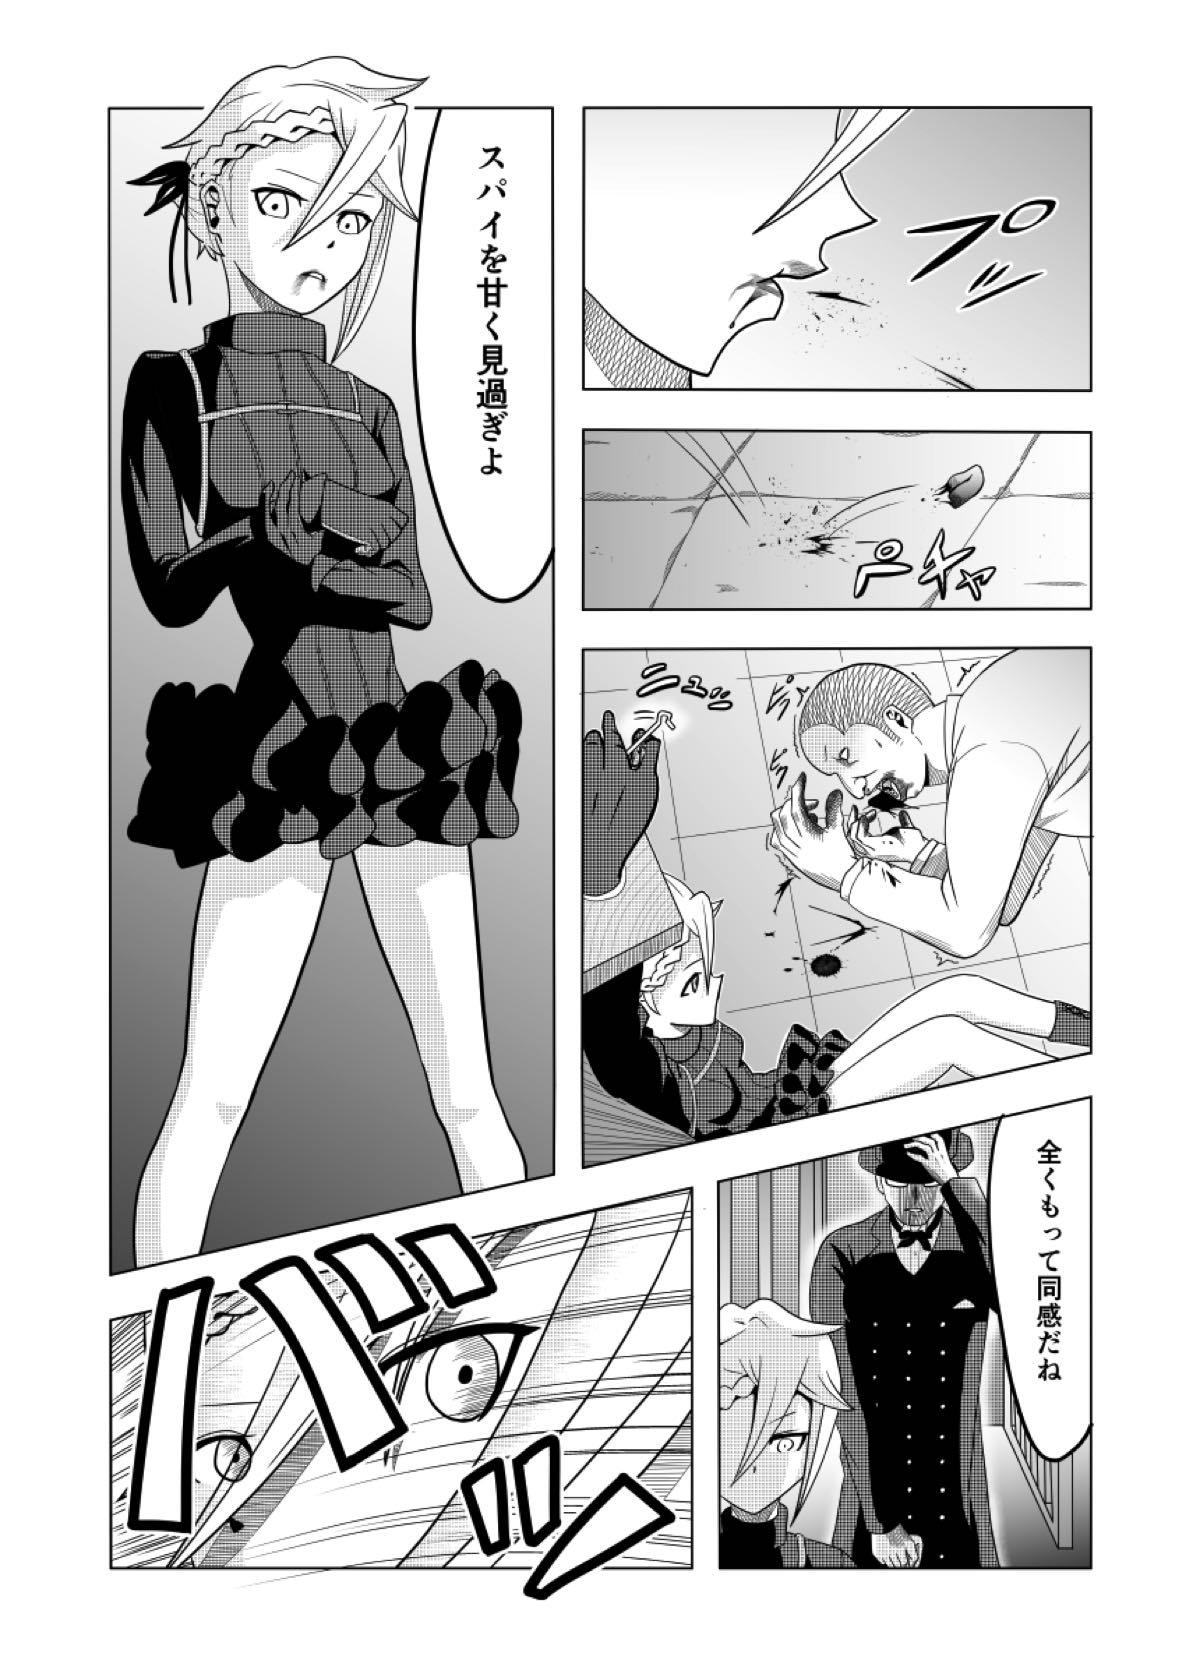 Perra 捕まったスパイ - Princess principal Pantyhose - Page 4